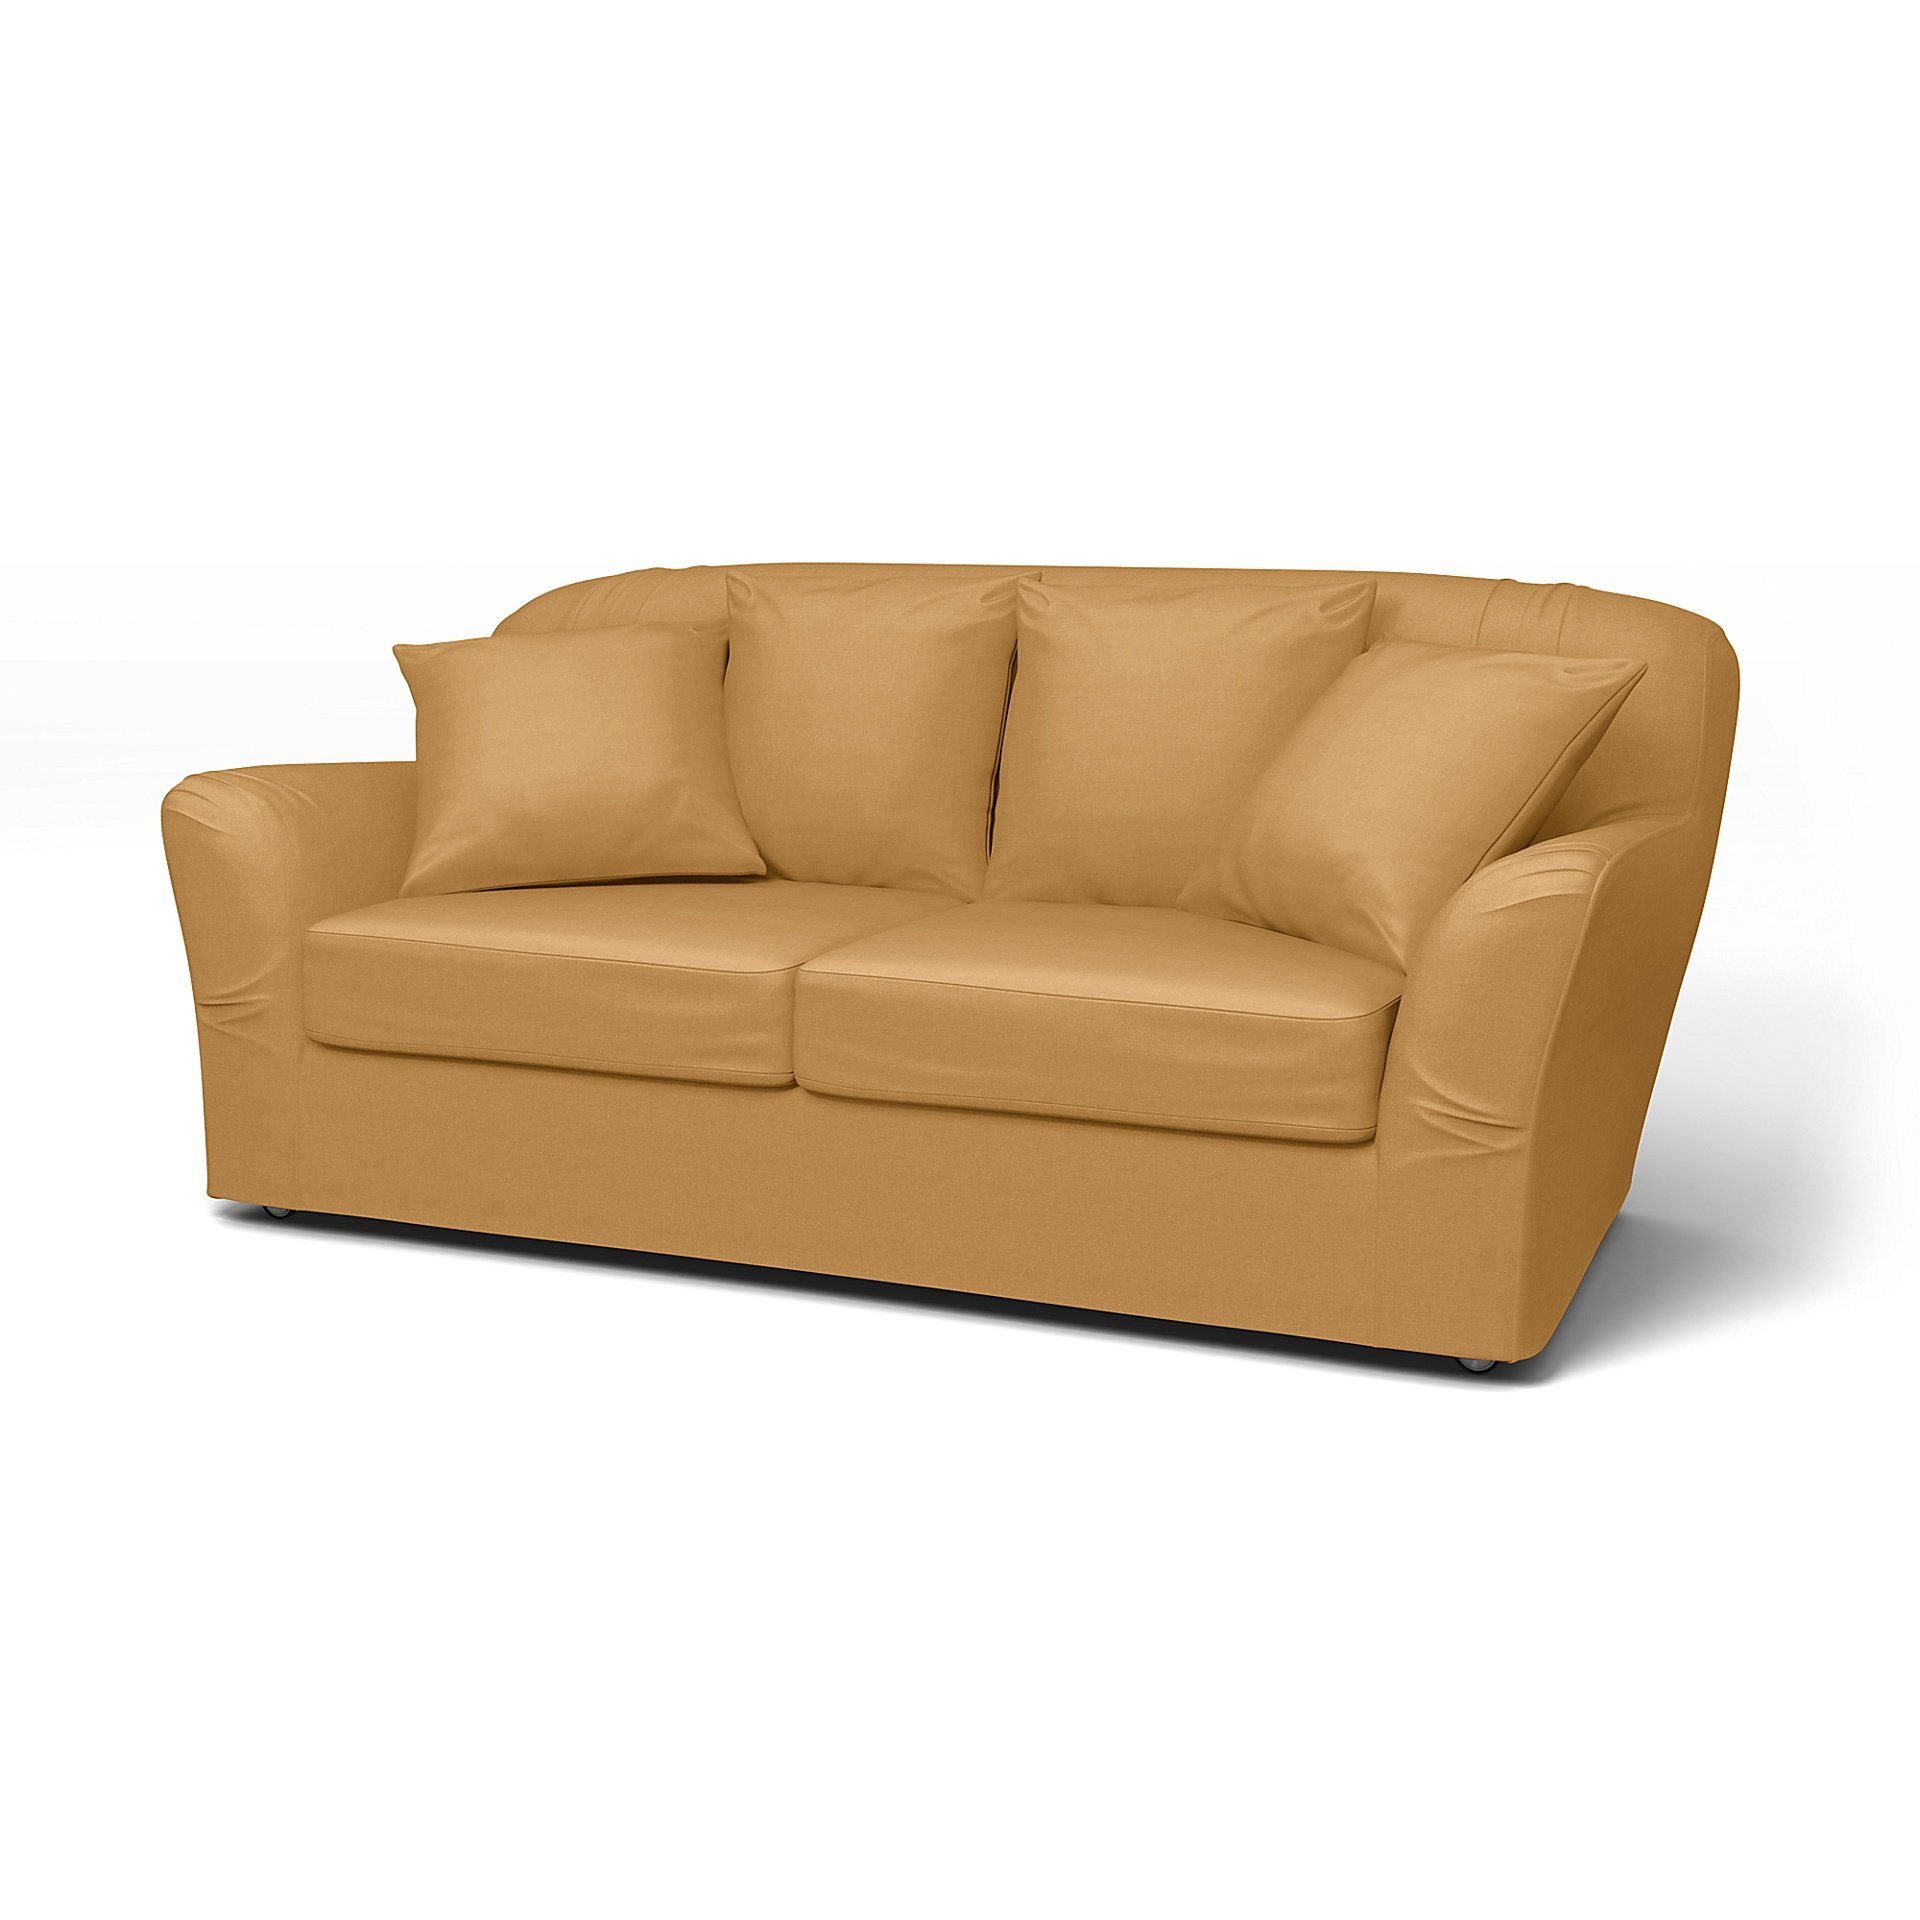 IKEA - Tomelilla 2 seater sofa, Mustard, Linen - Bemz